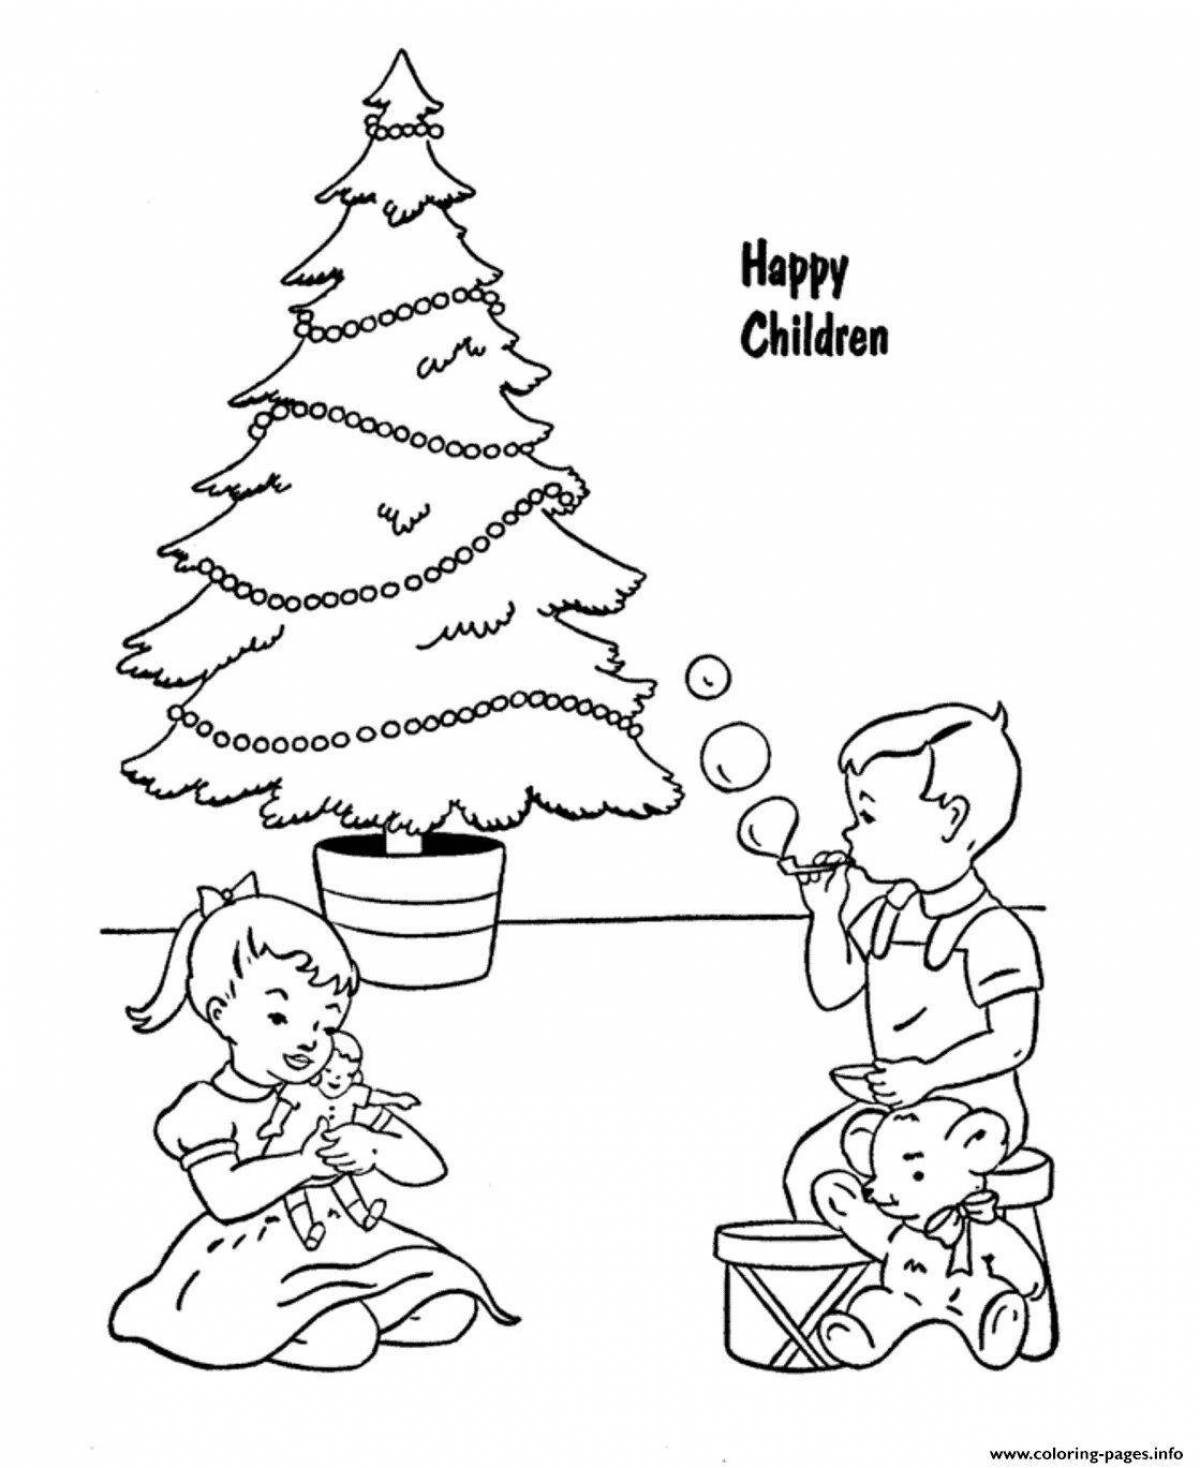 Big Christmas family coloring book